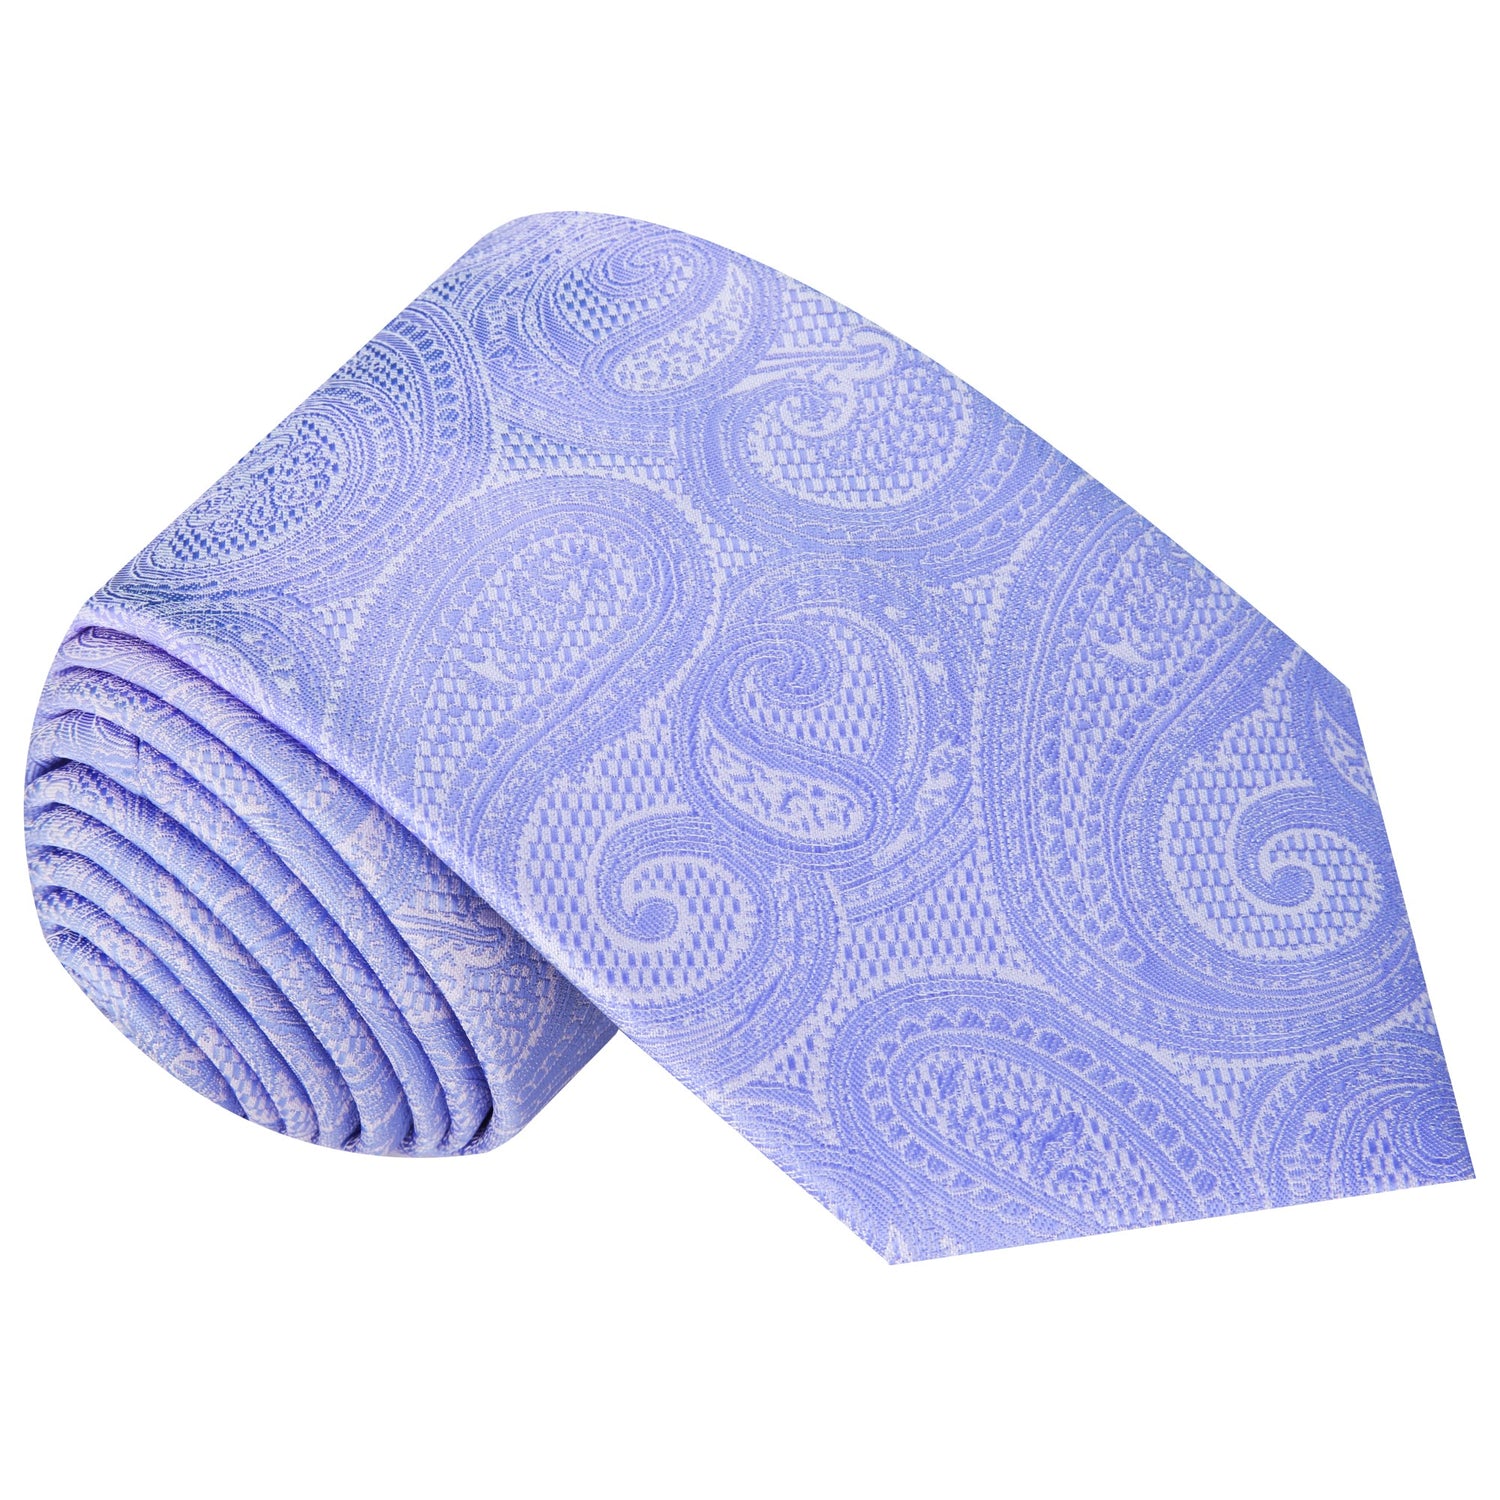 Rolled Up: Greyish Steel Blue Paisley Necktie